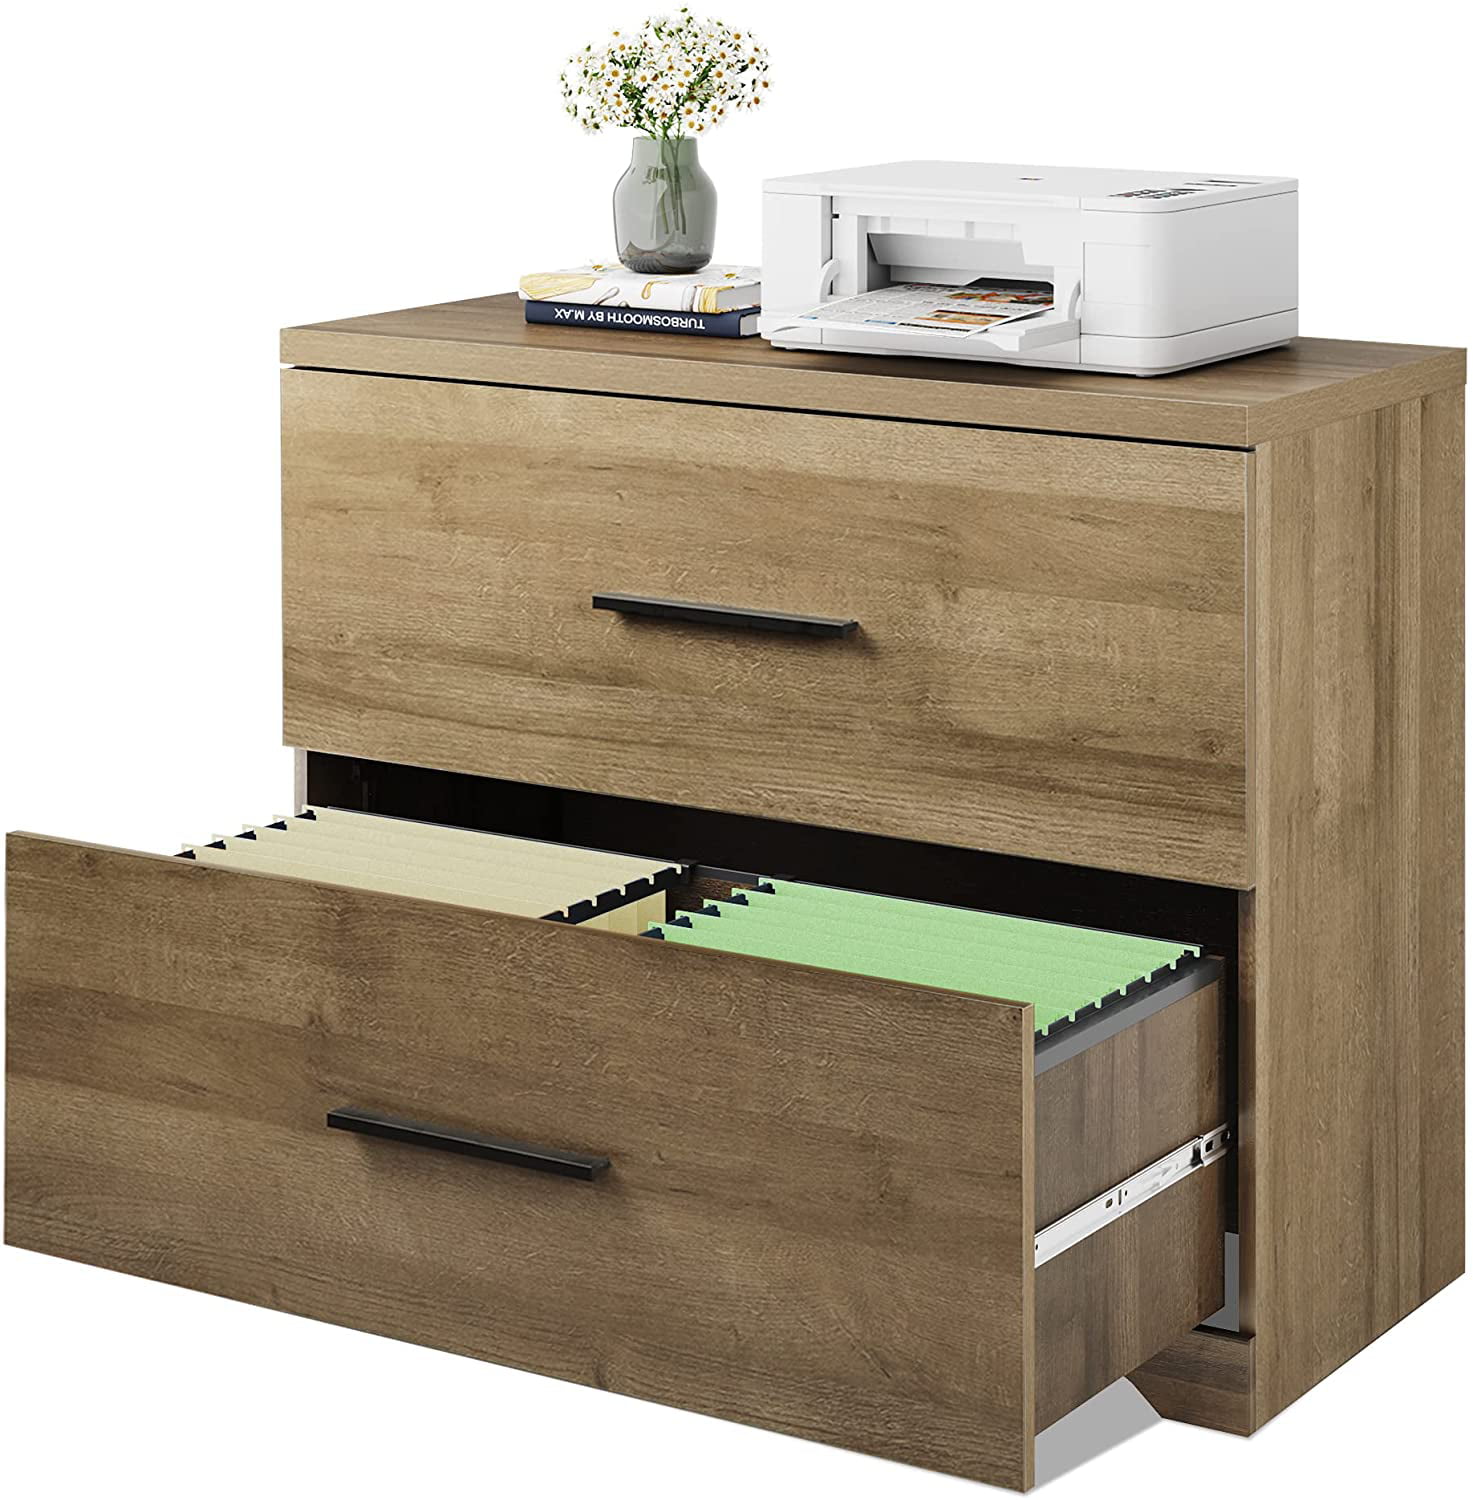 2 Drawer Wood File Cabinet Filing Office Storage Furniture Legal/Letter Size 